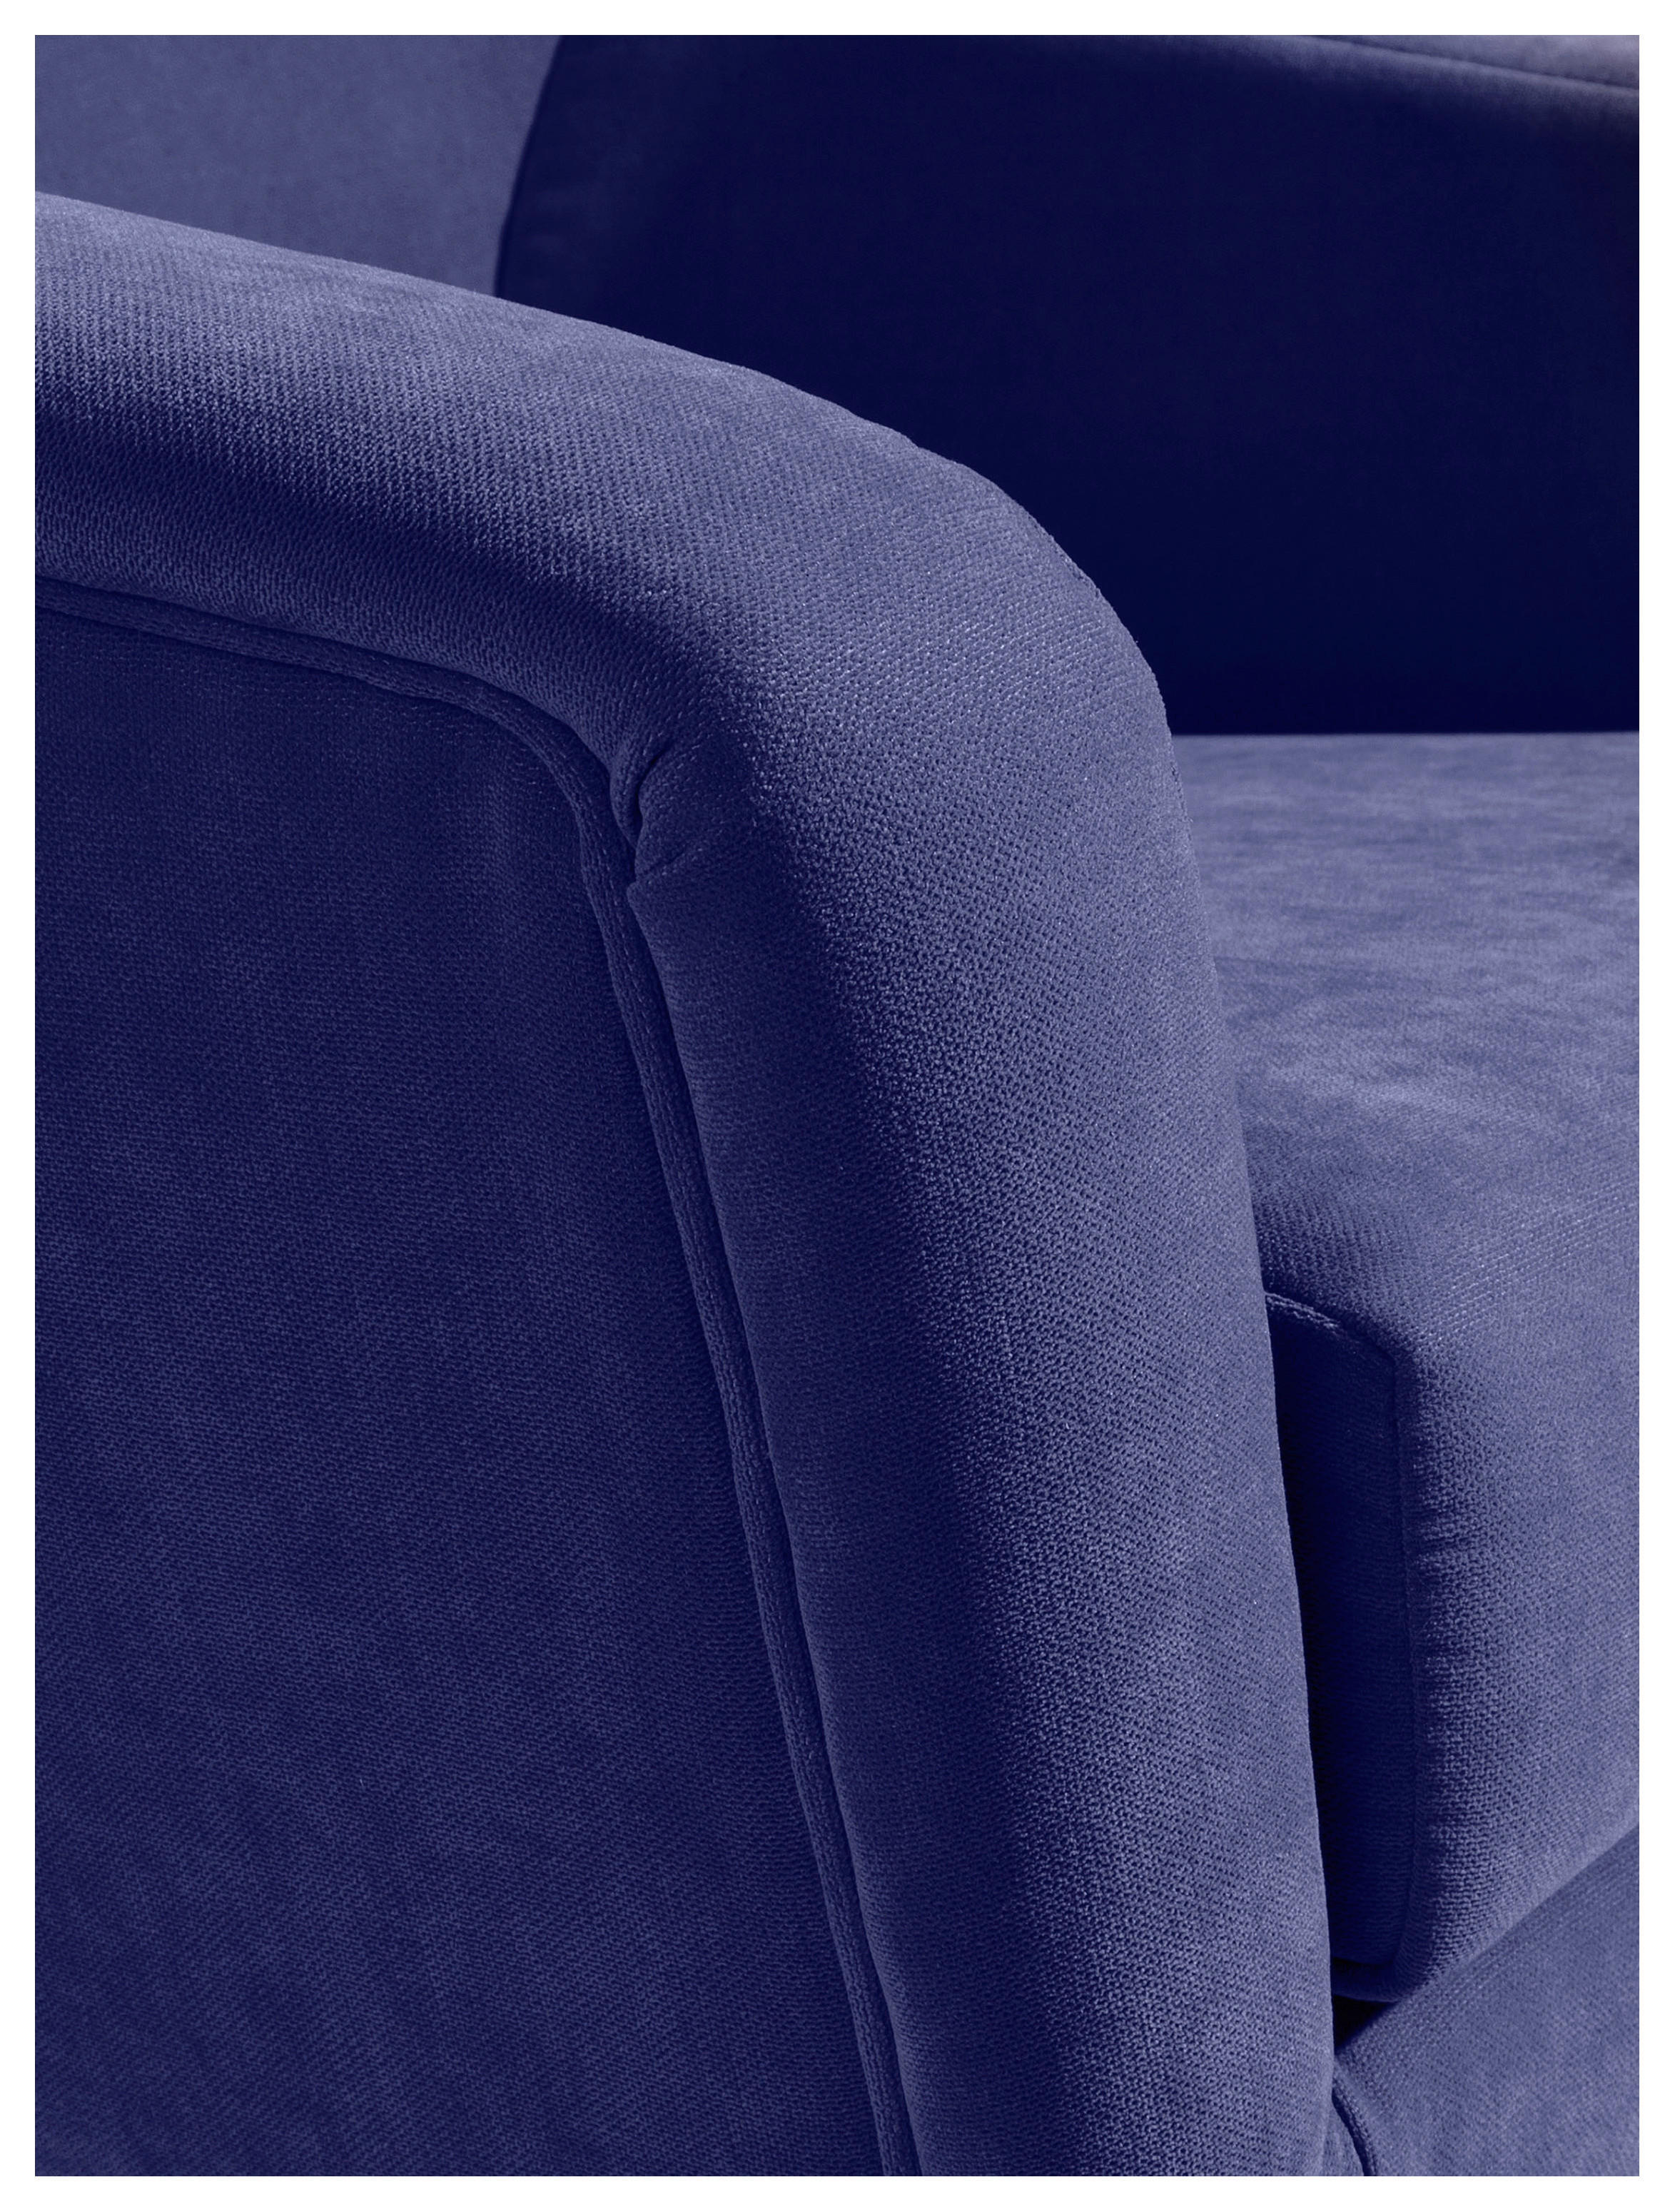 SESSEL Velours Blau    - Blau/Buchefarben, Design, Holz/Textil (67/81/71cm) - Max Winzer